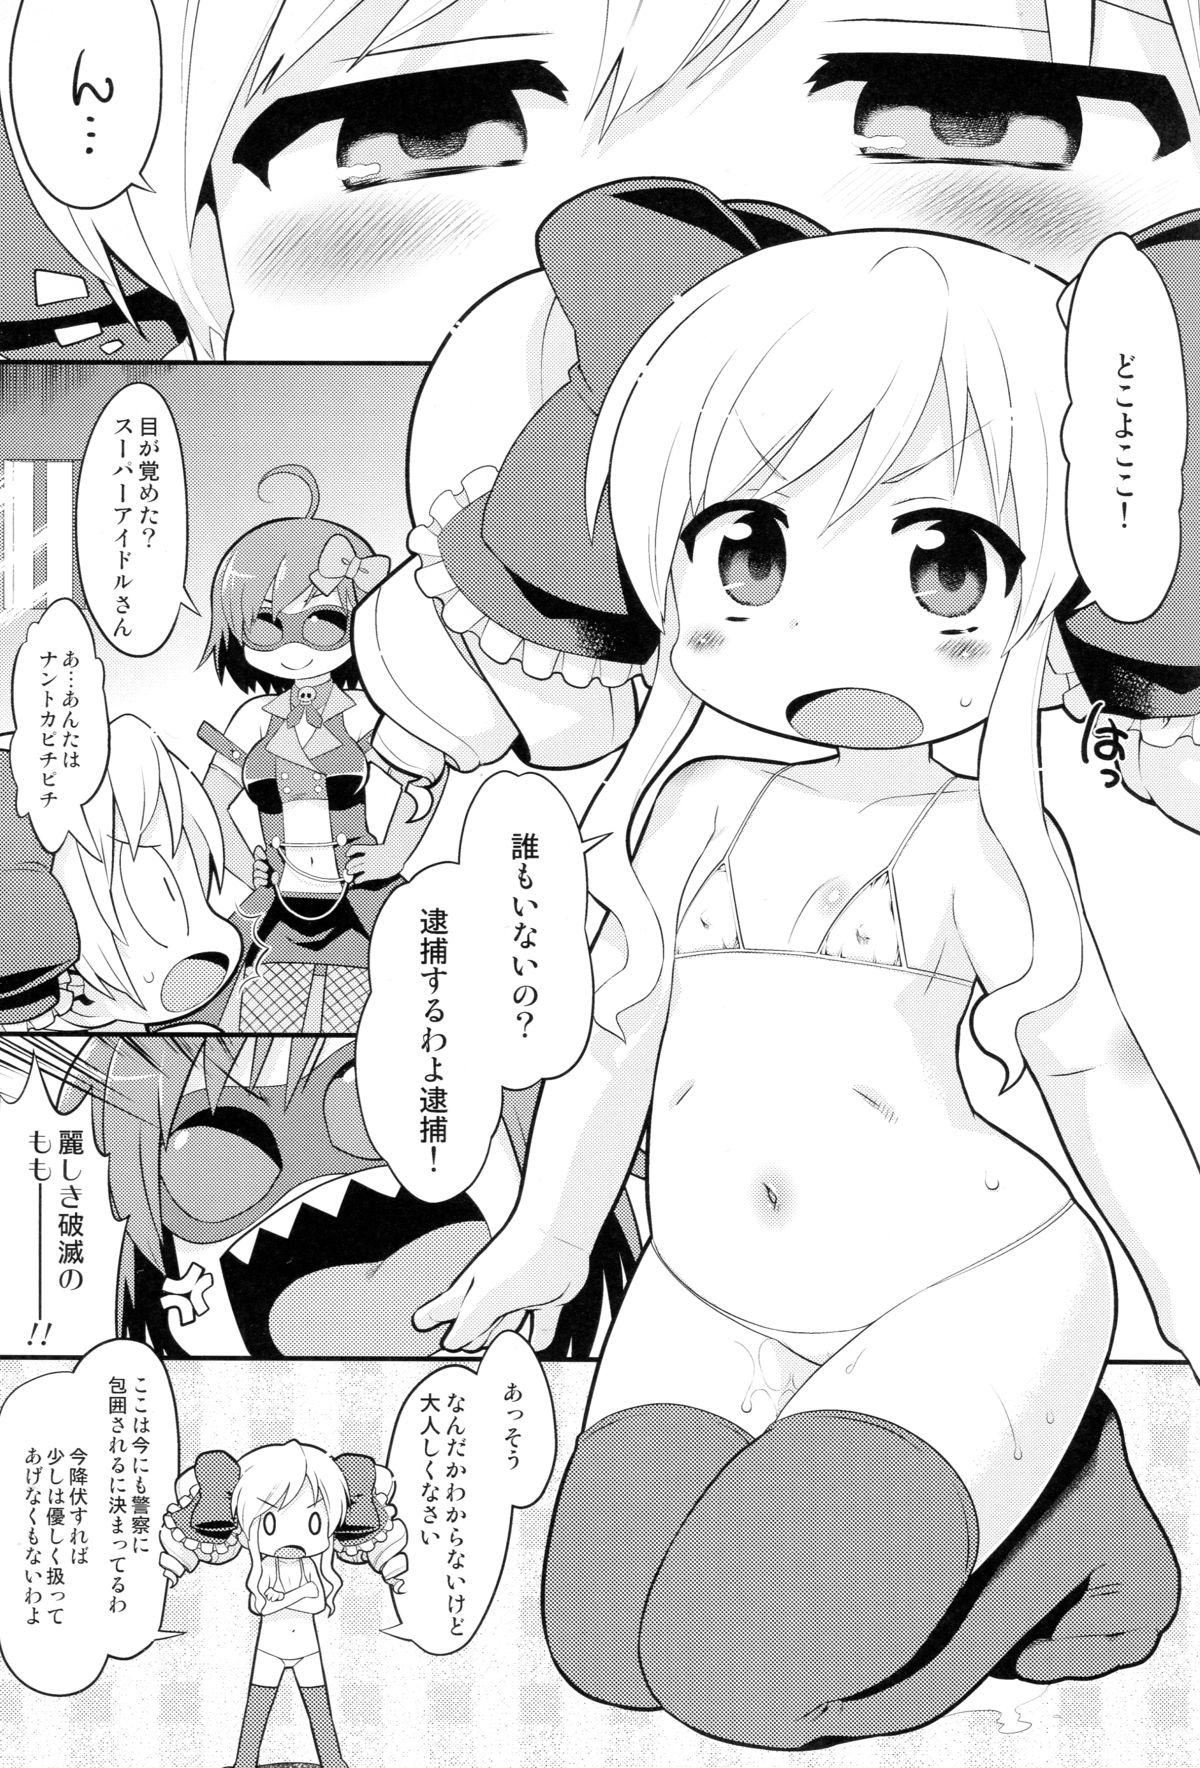 3some Ano Hito wa Ima - Tantei opera milky holmes Sapphic Erotica - Page 2